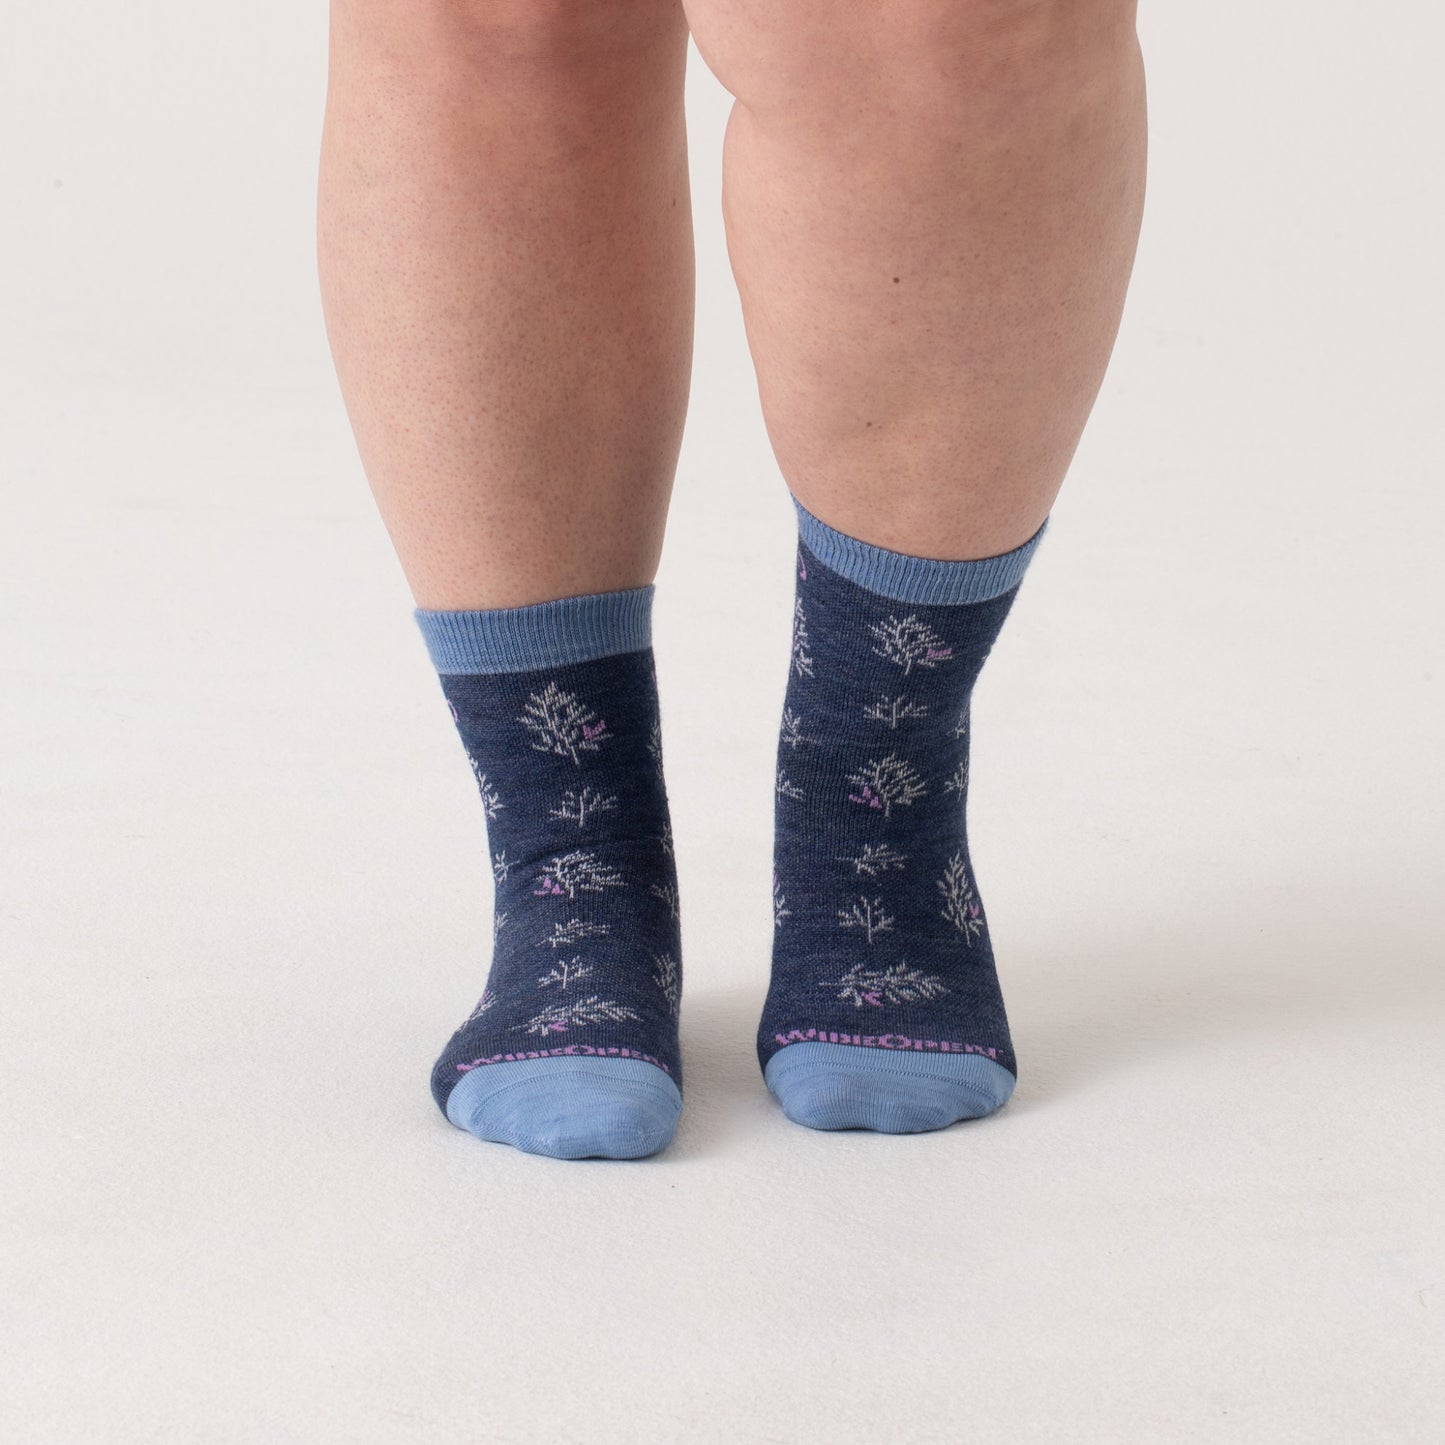 Micro Crews on model with light blue heel/toe/cuff, Denim body and white design --Denim